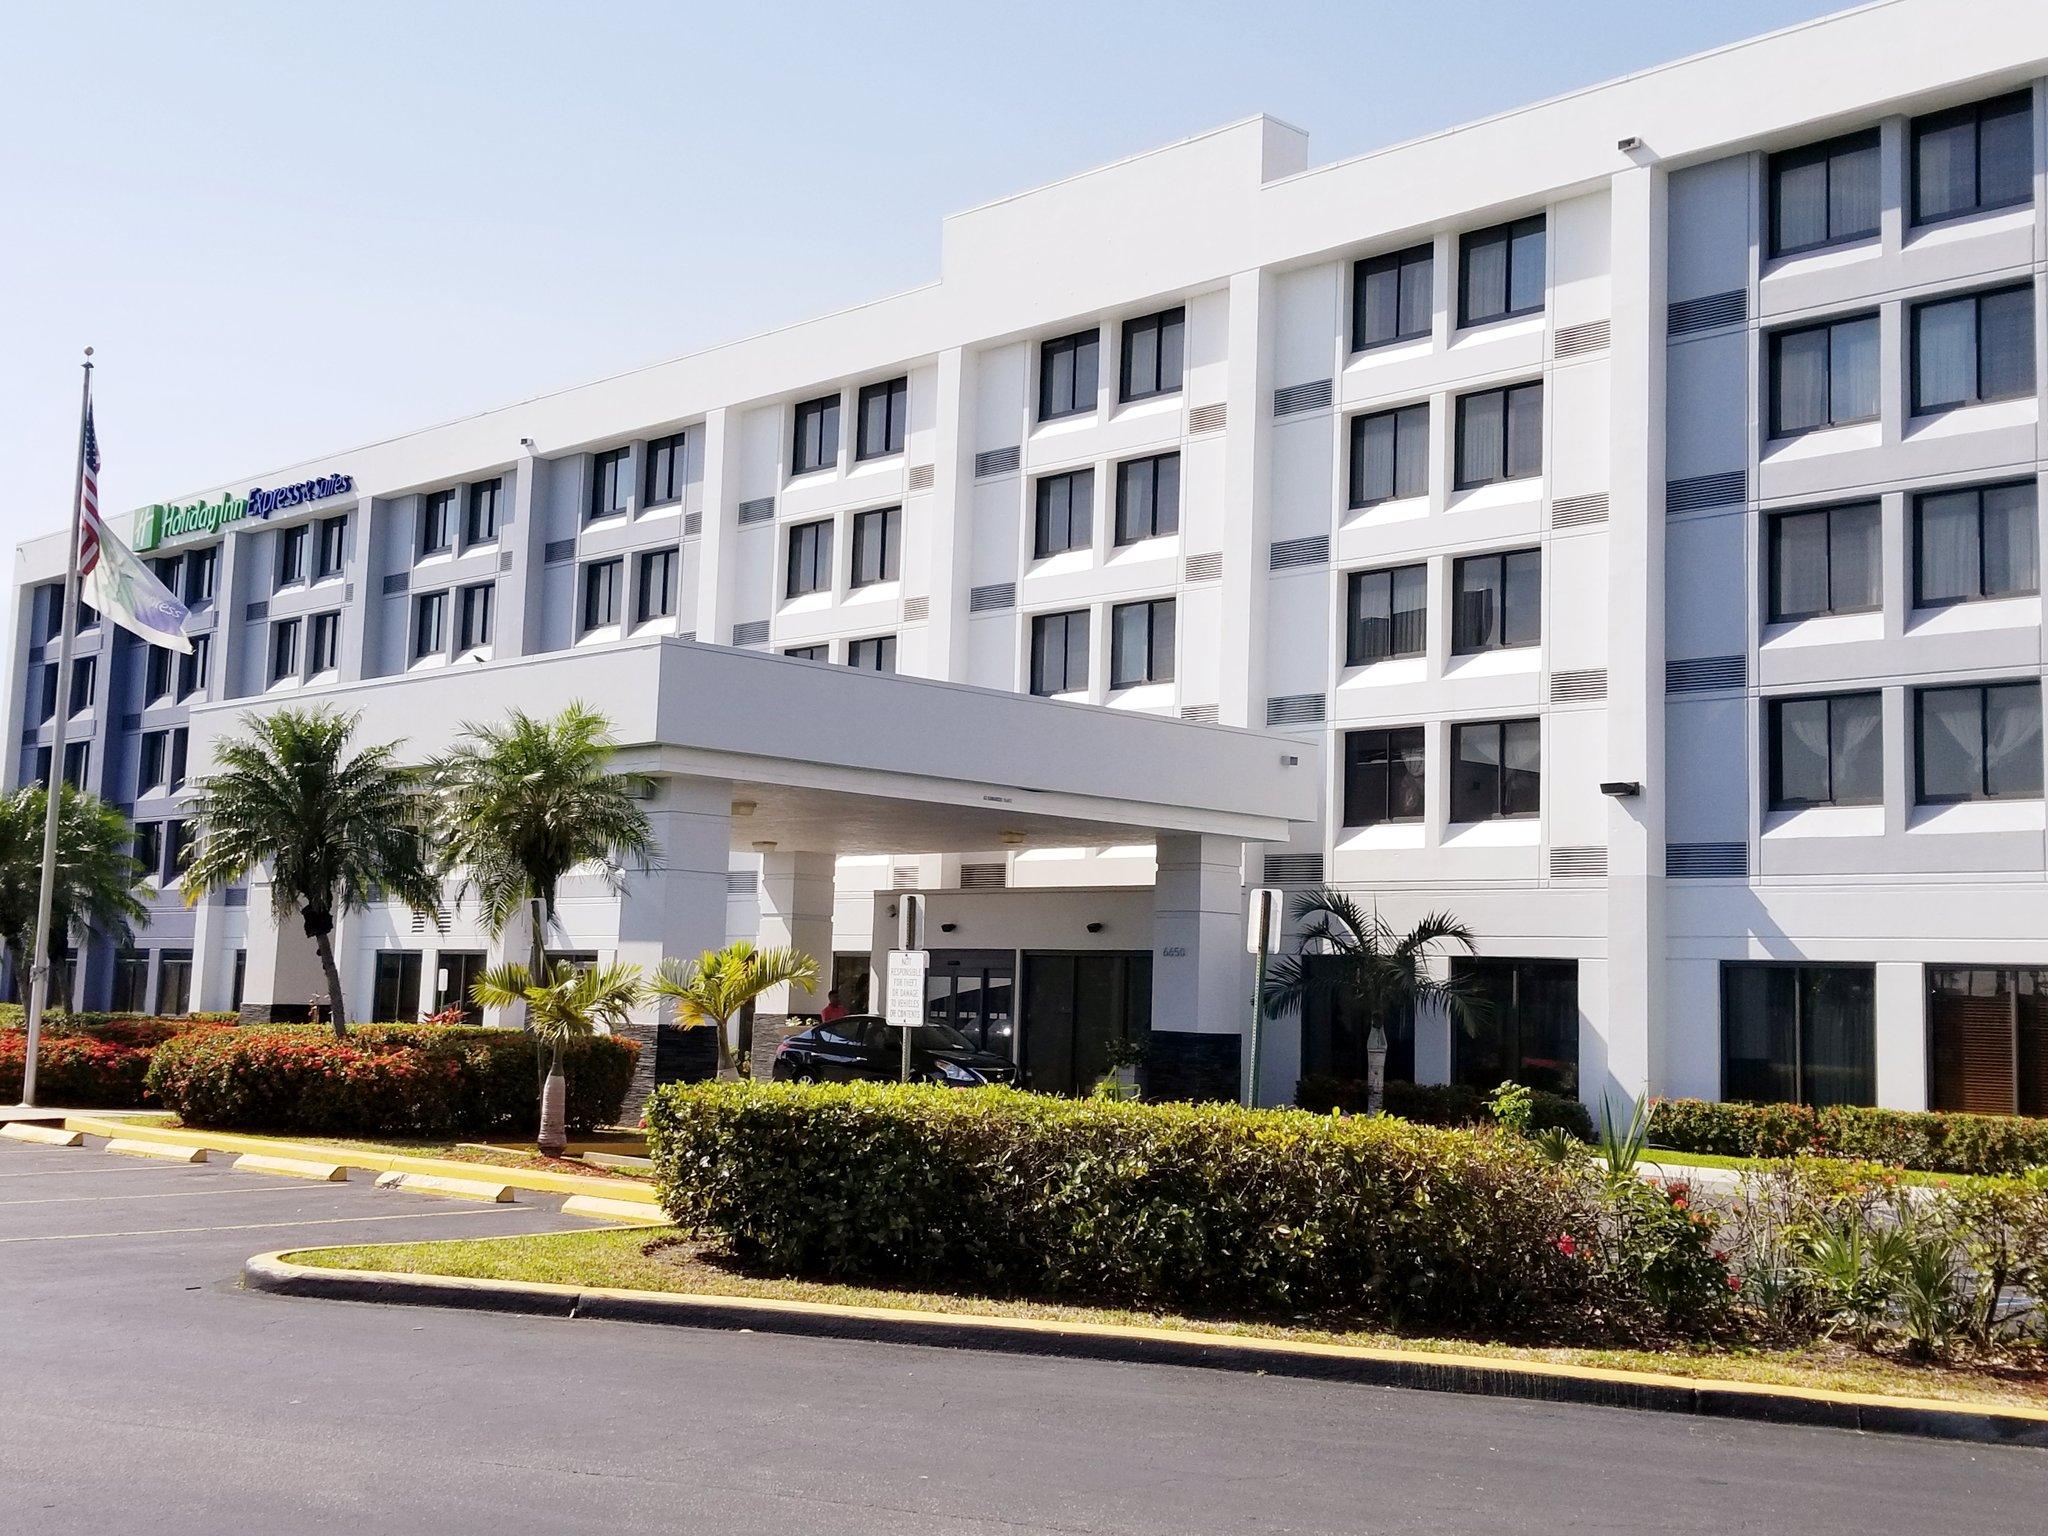 Holiday Inn Express Hotel & Suites Miami-Hialeah (Miami Lakes) in Hialeah, FL